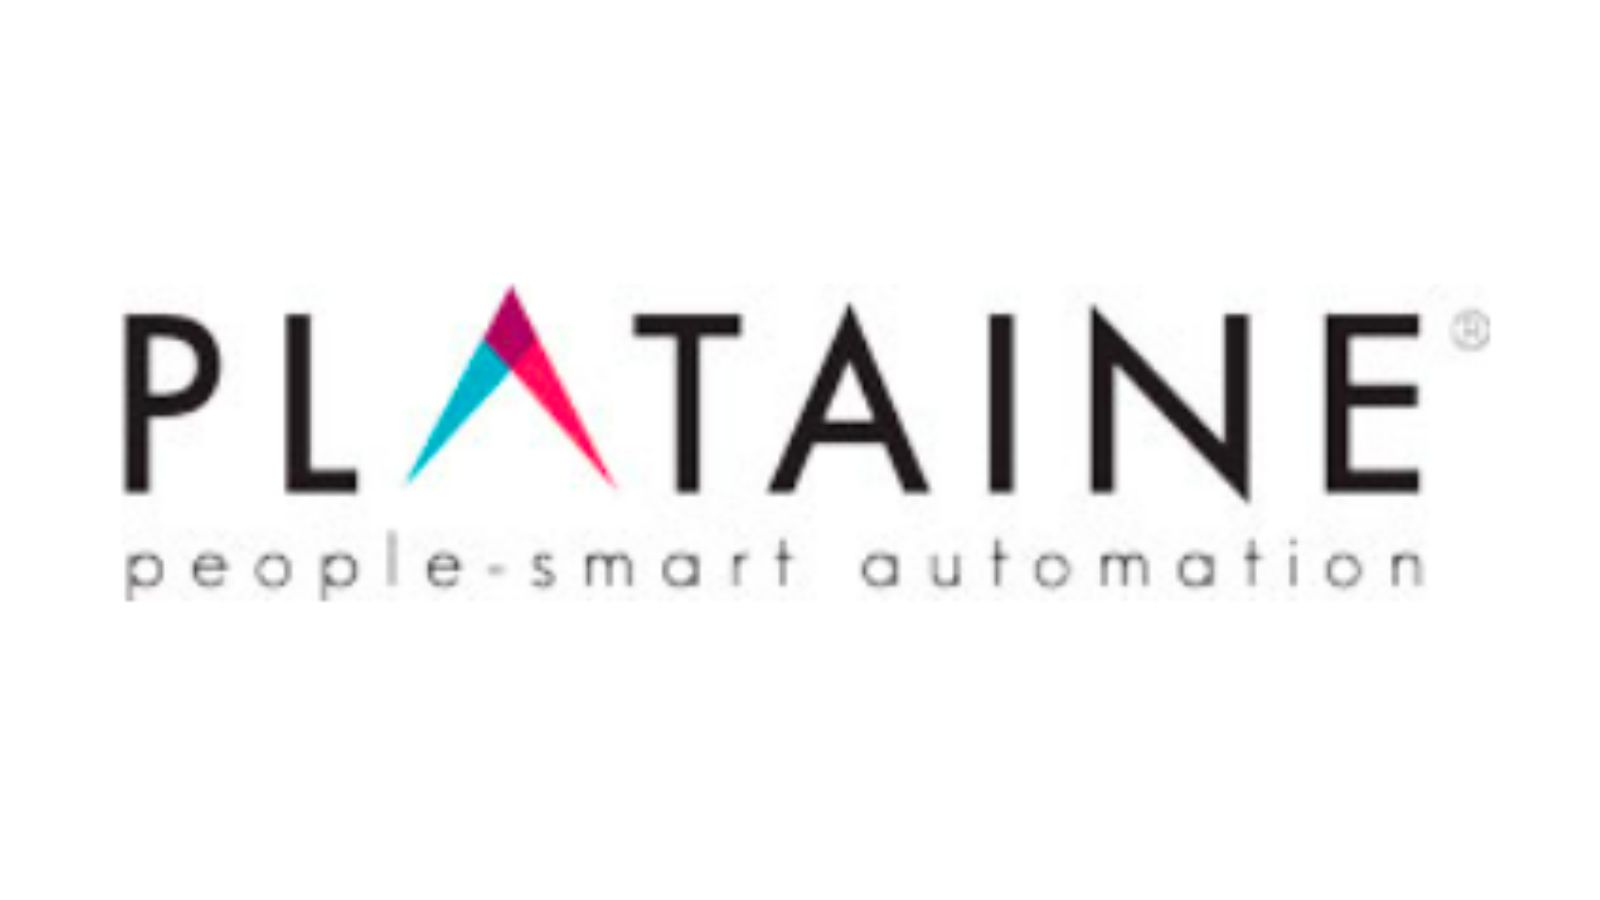 Plataine Ltd—— 提供工业物联网和人工智能优化解决方案的领先供应商